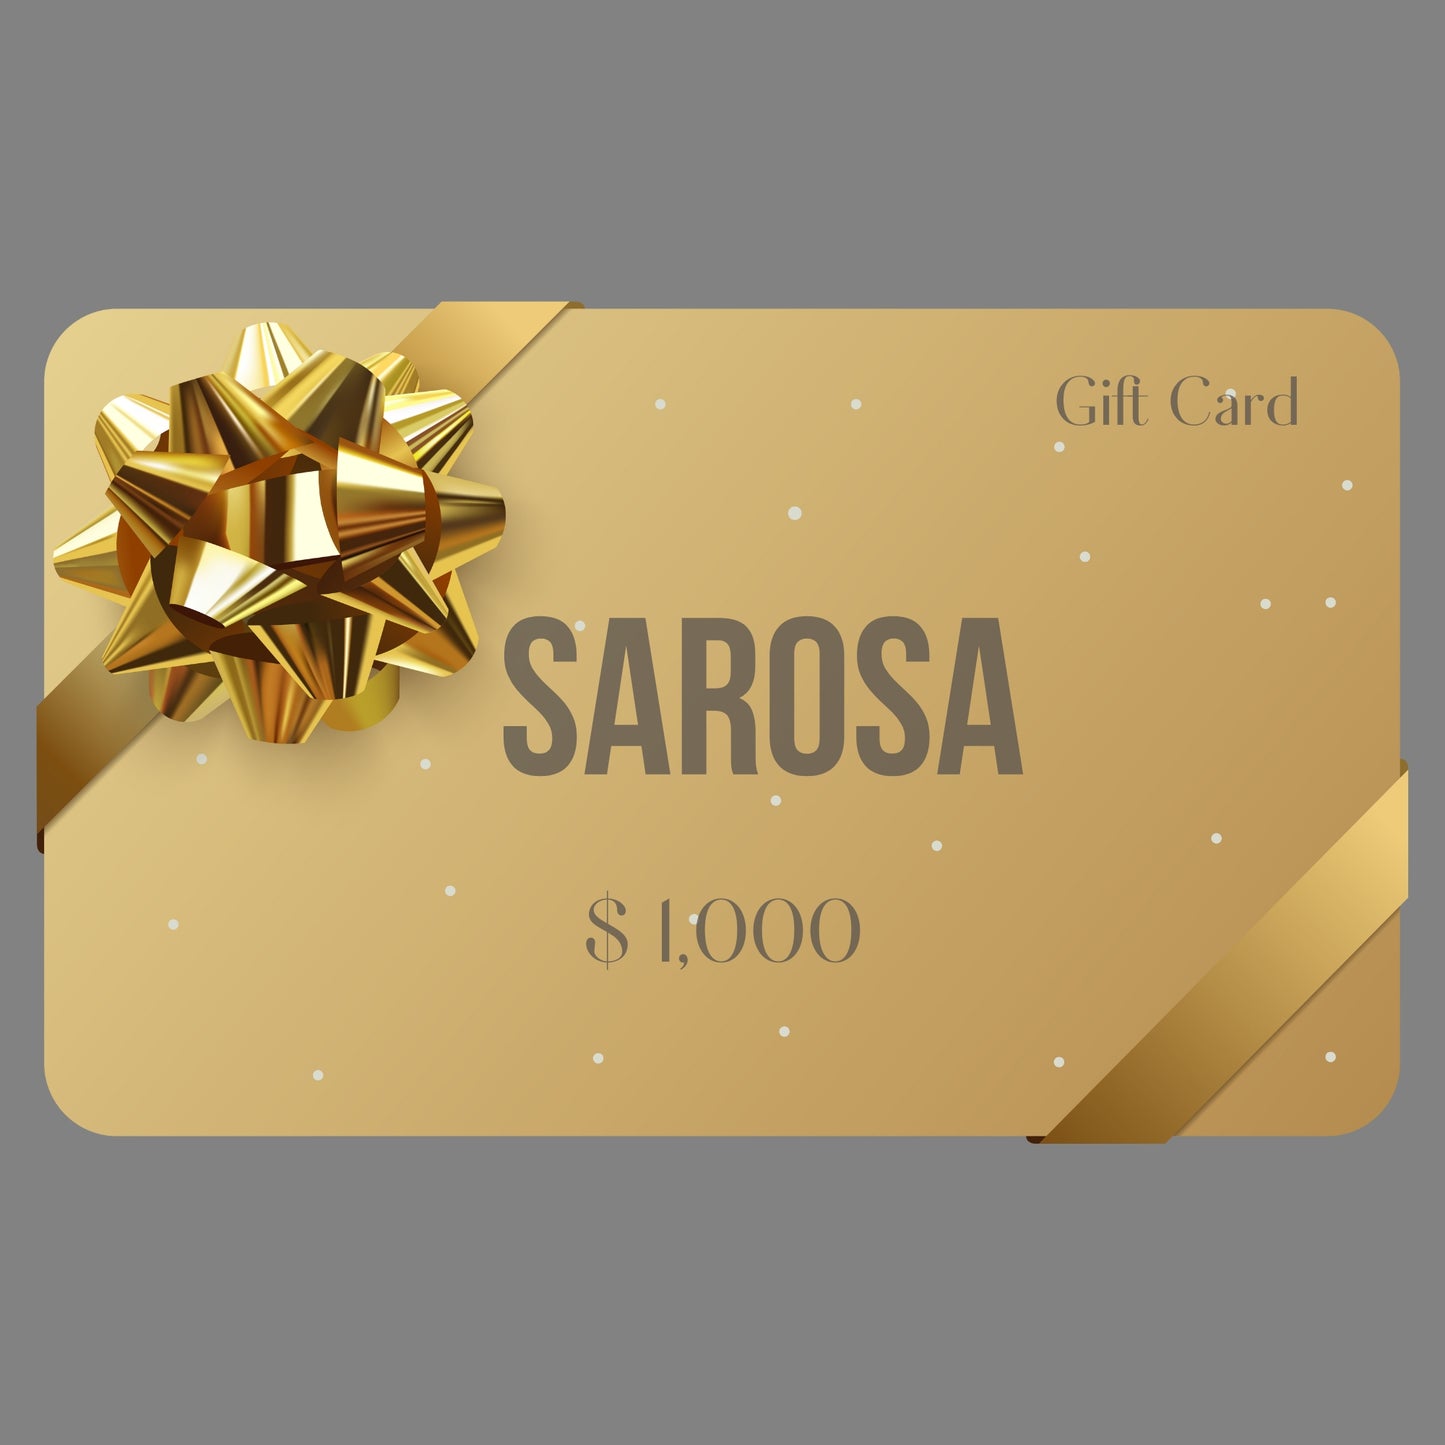 Gift Card SAROSA